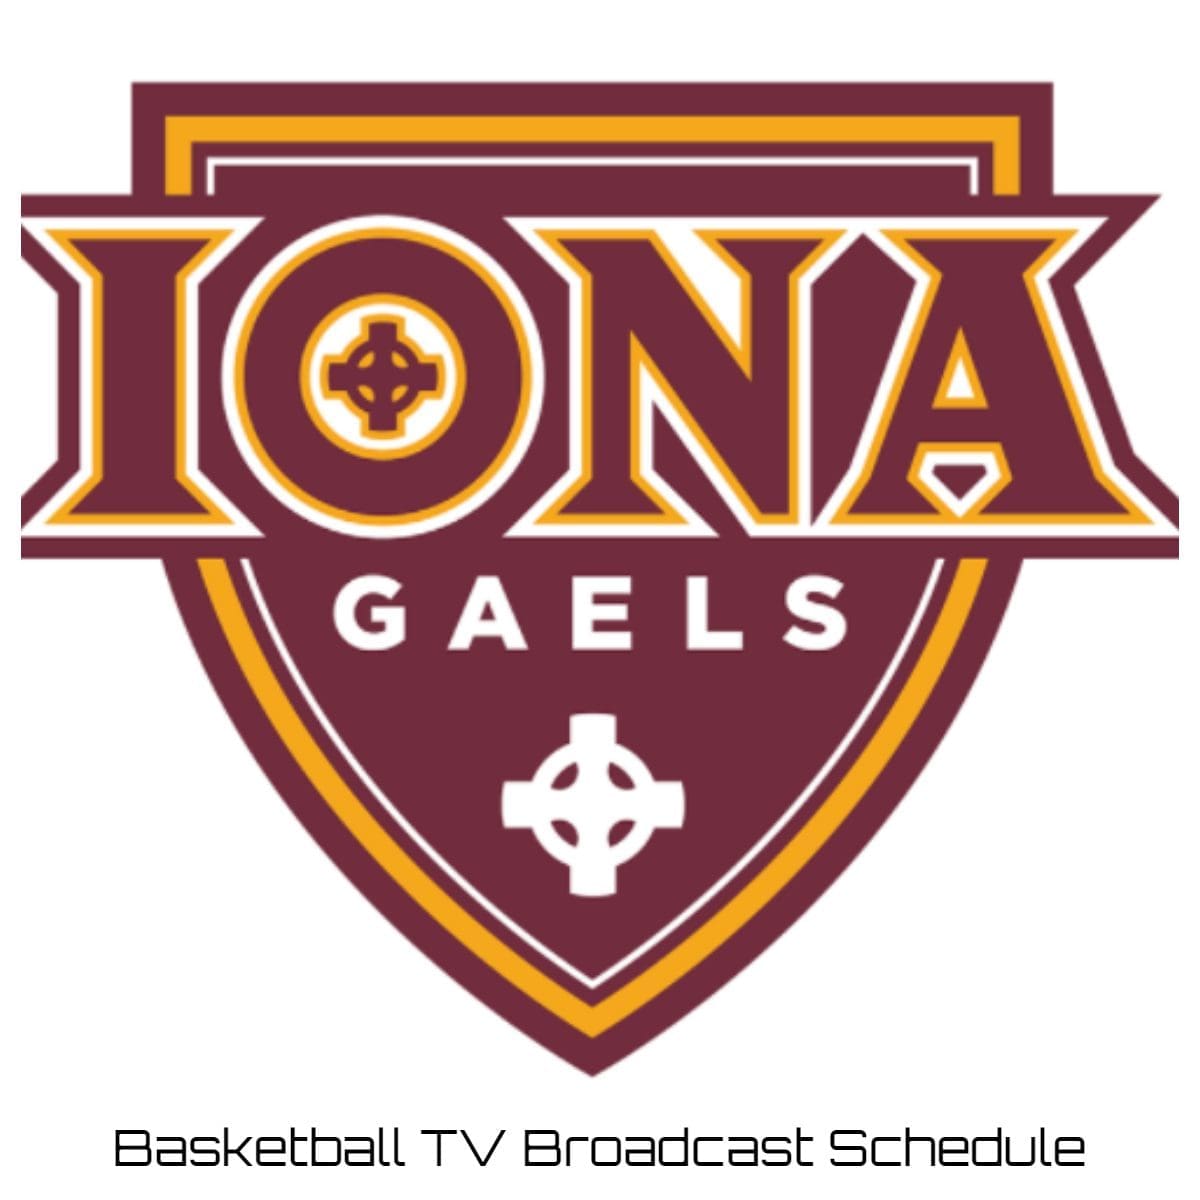 Iona Gaels Basketball TV Broadcast Schedule